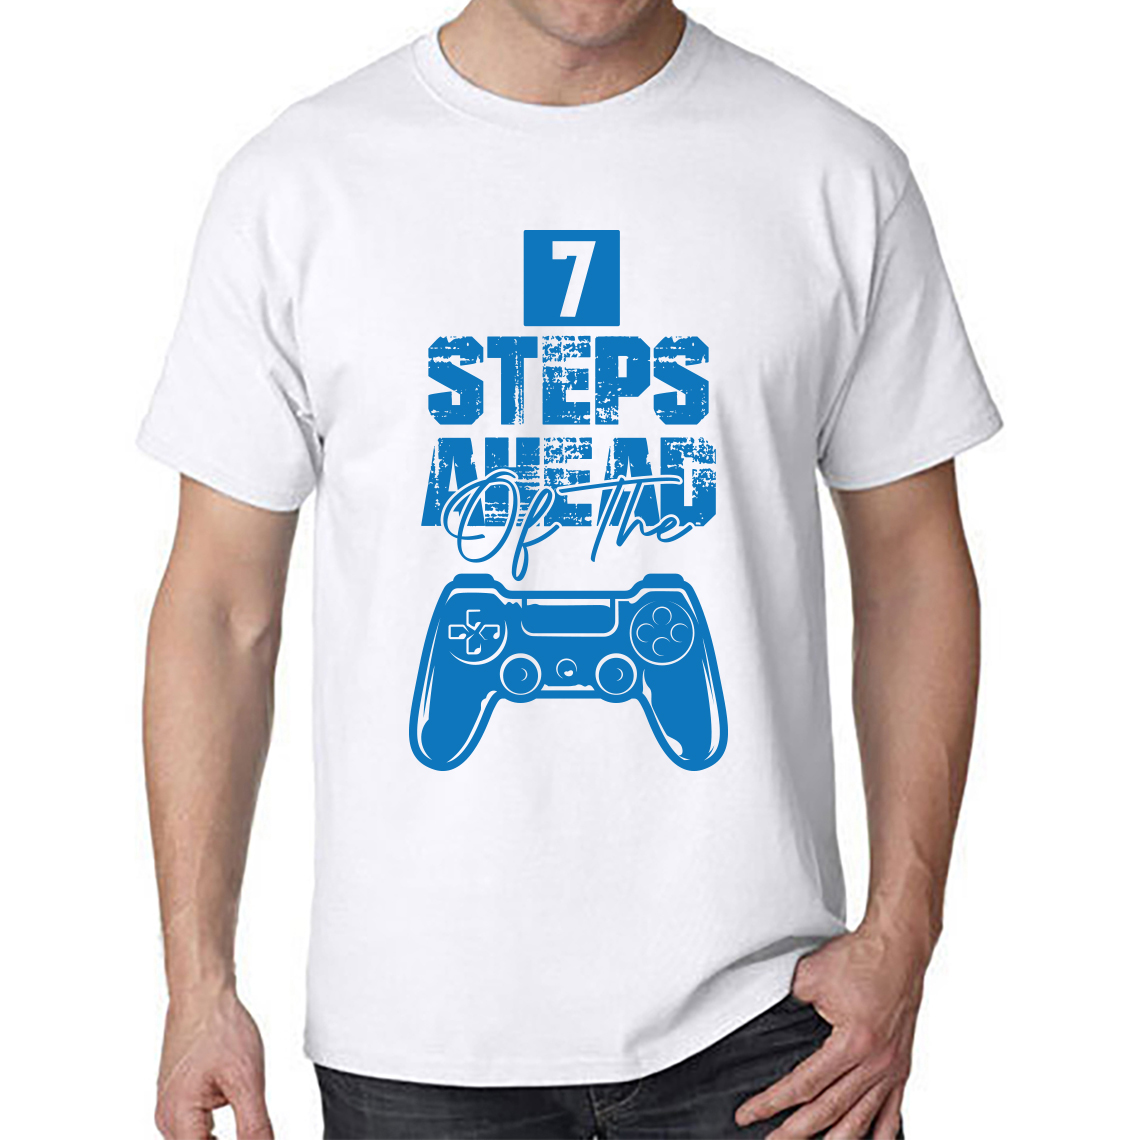 T Shirts Design 7 steps ahead